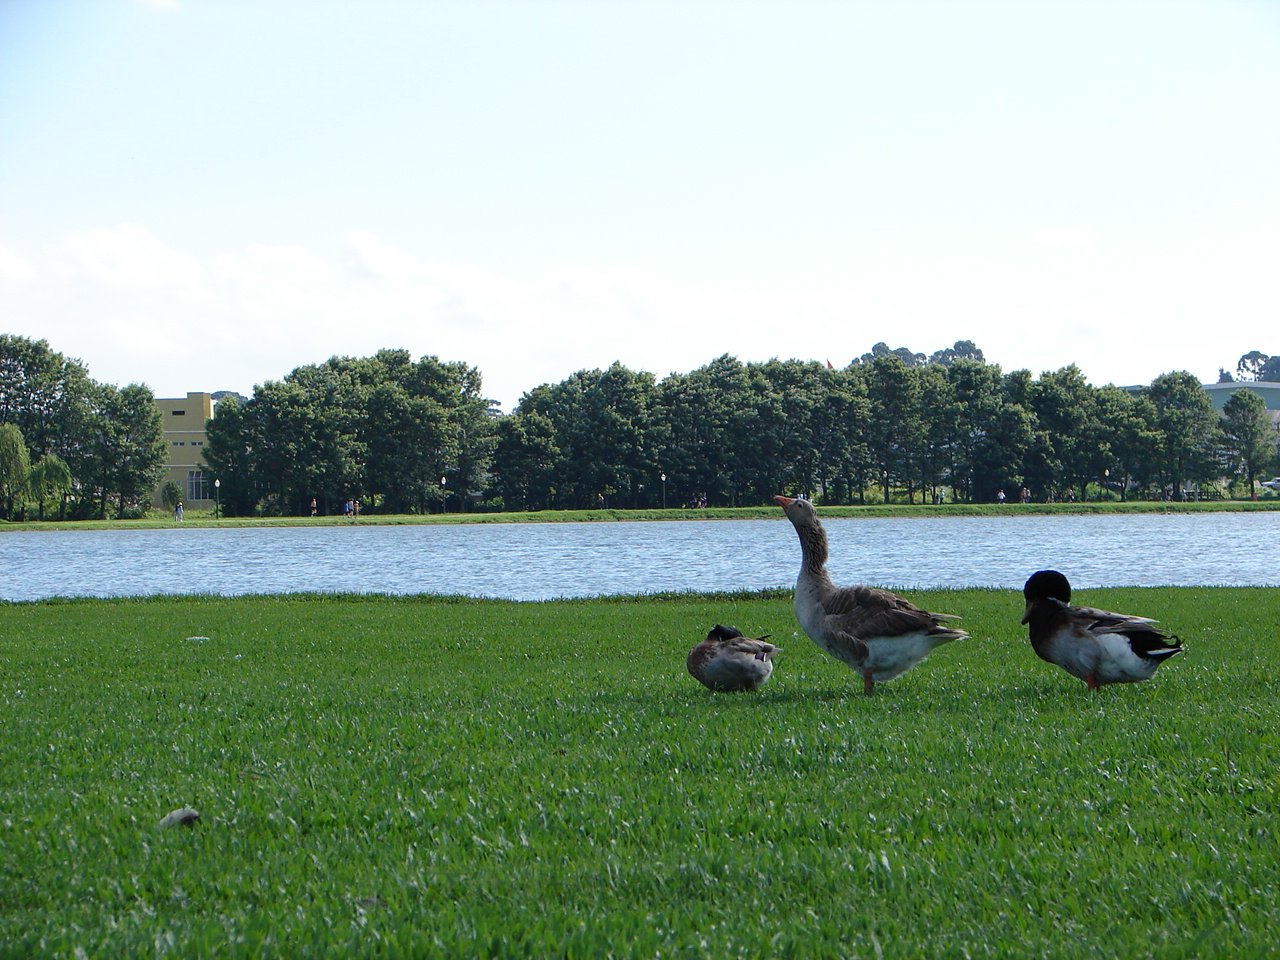 three ducks are in a grassy area next to a river